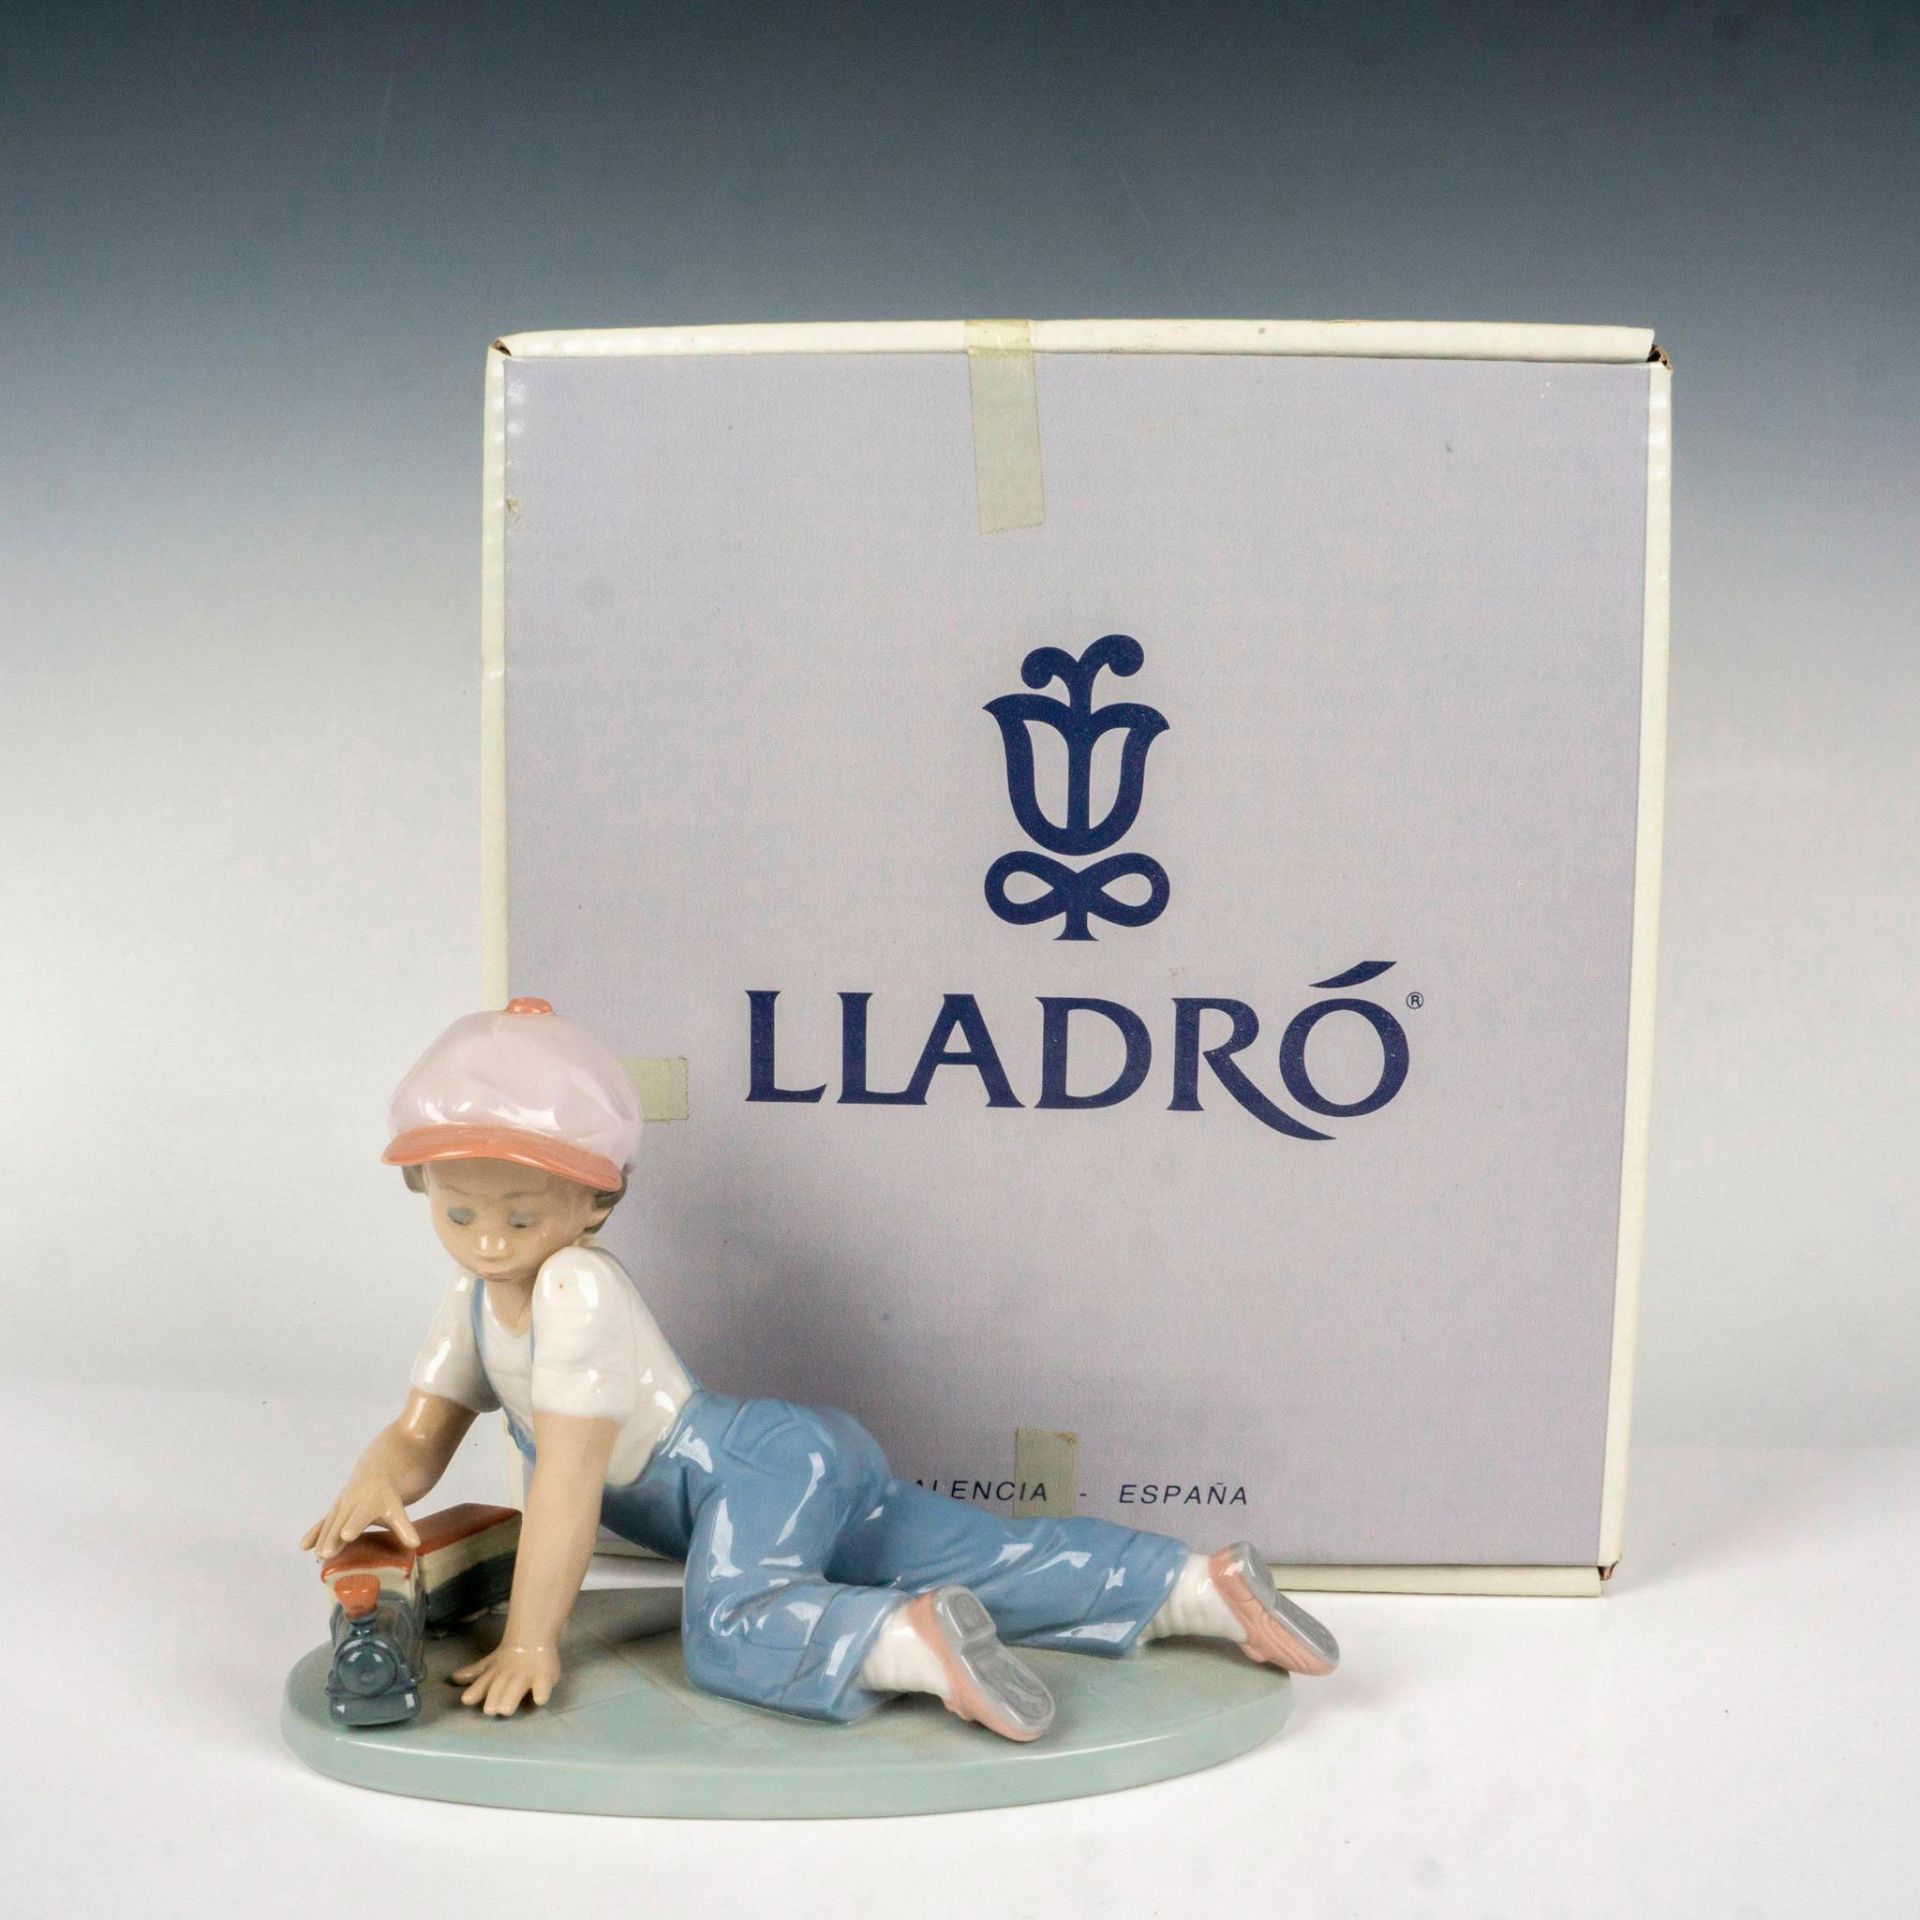 All Aboard 1007619 - Lladro Porcelain Figurine - Image 4 of 4